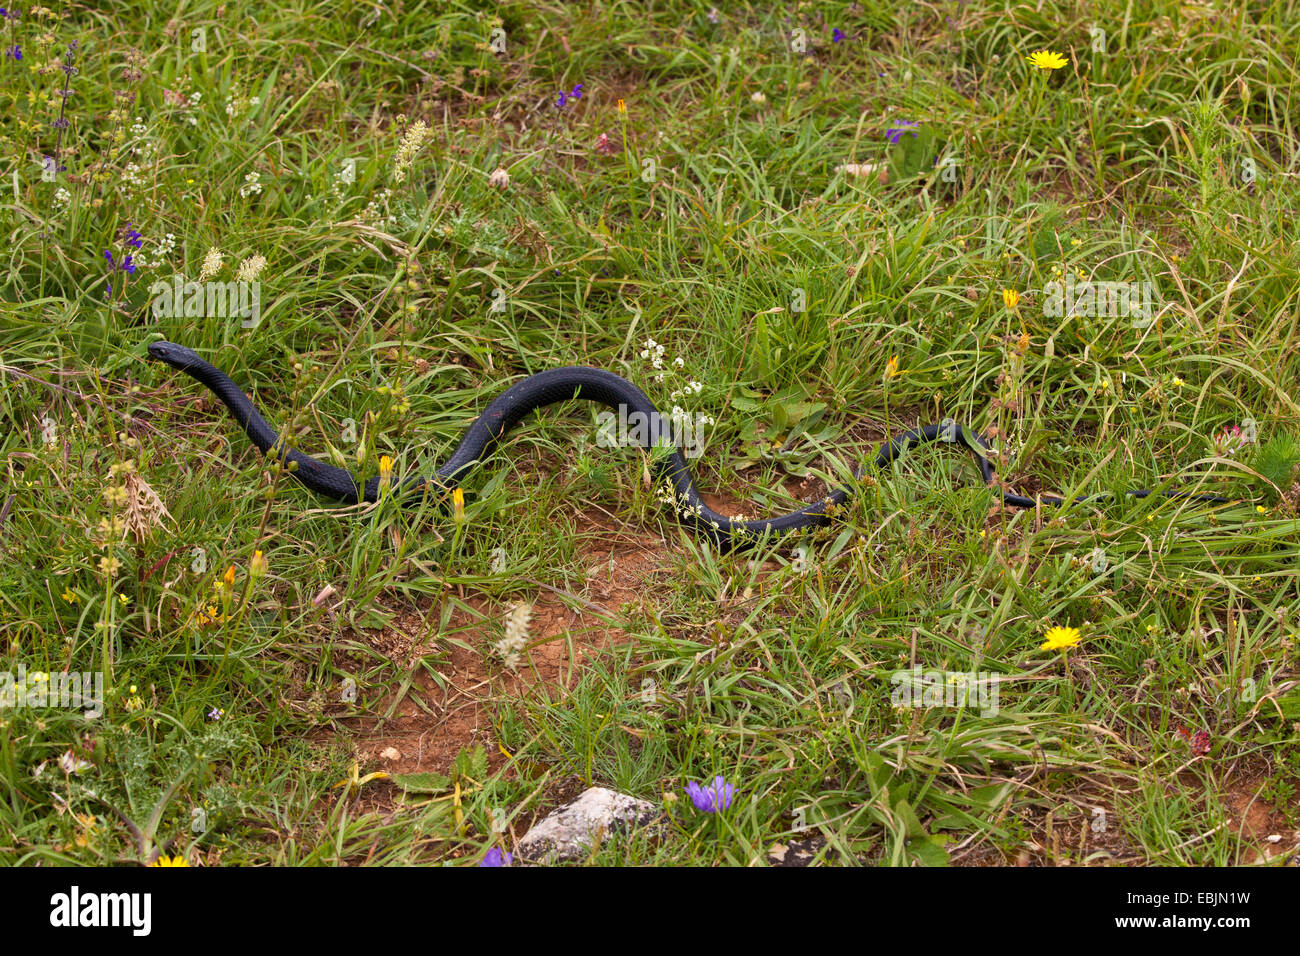 Unione frusta snake, dell'Europa occidentale frusta snake, verde scuro e whipsnake (Coluber viridiflavus, Hierophis viridiflavus), nero morph lento in un prato, Croazia, Istria Foto Stock